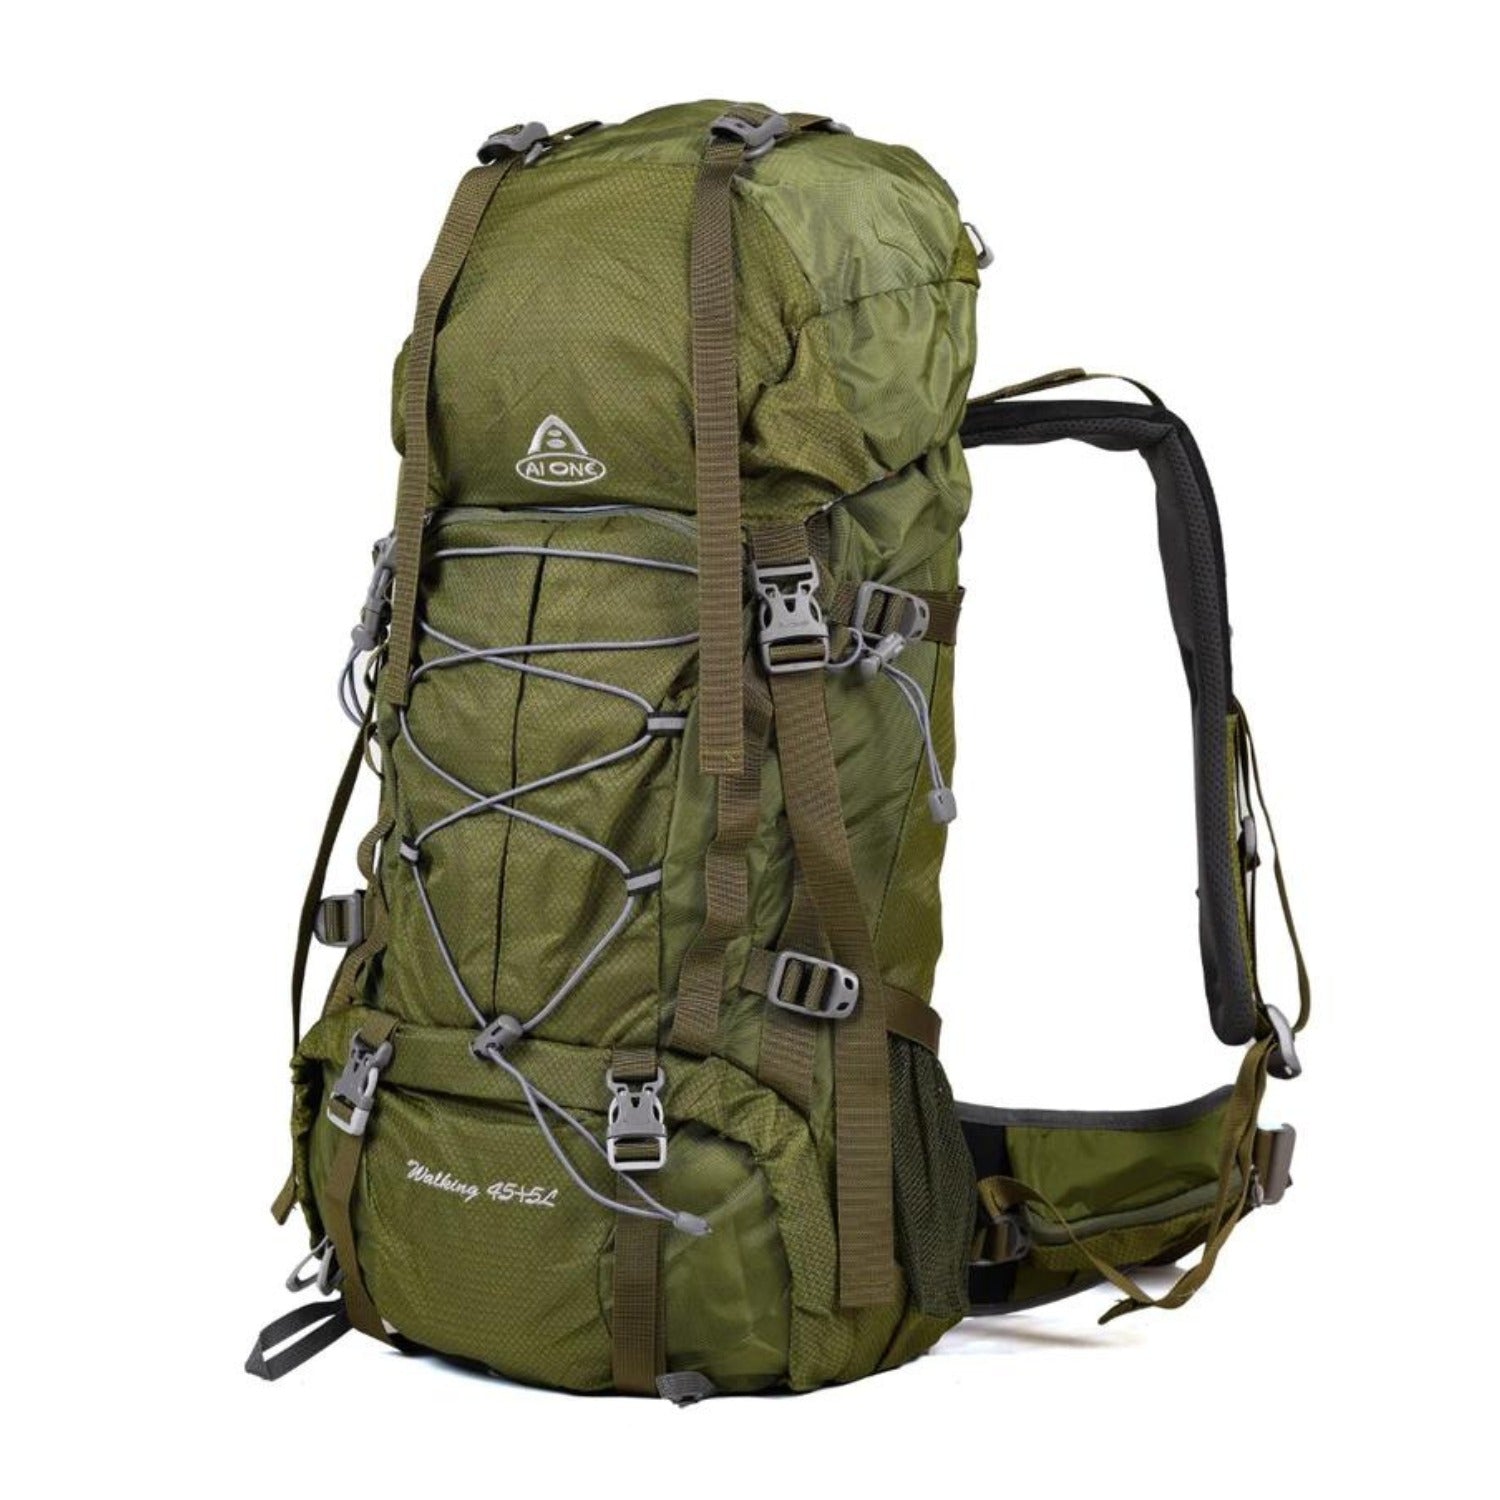 Buy Gokyo Pro Trekking Backpack 45 + 5 Ltrs Olive | Trekking Backpack at Gokyo Outdoor Clothing & Gear